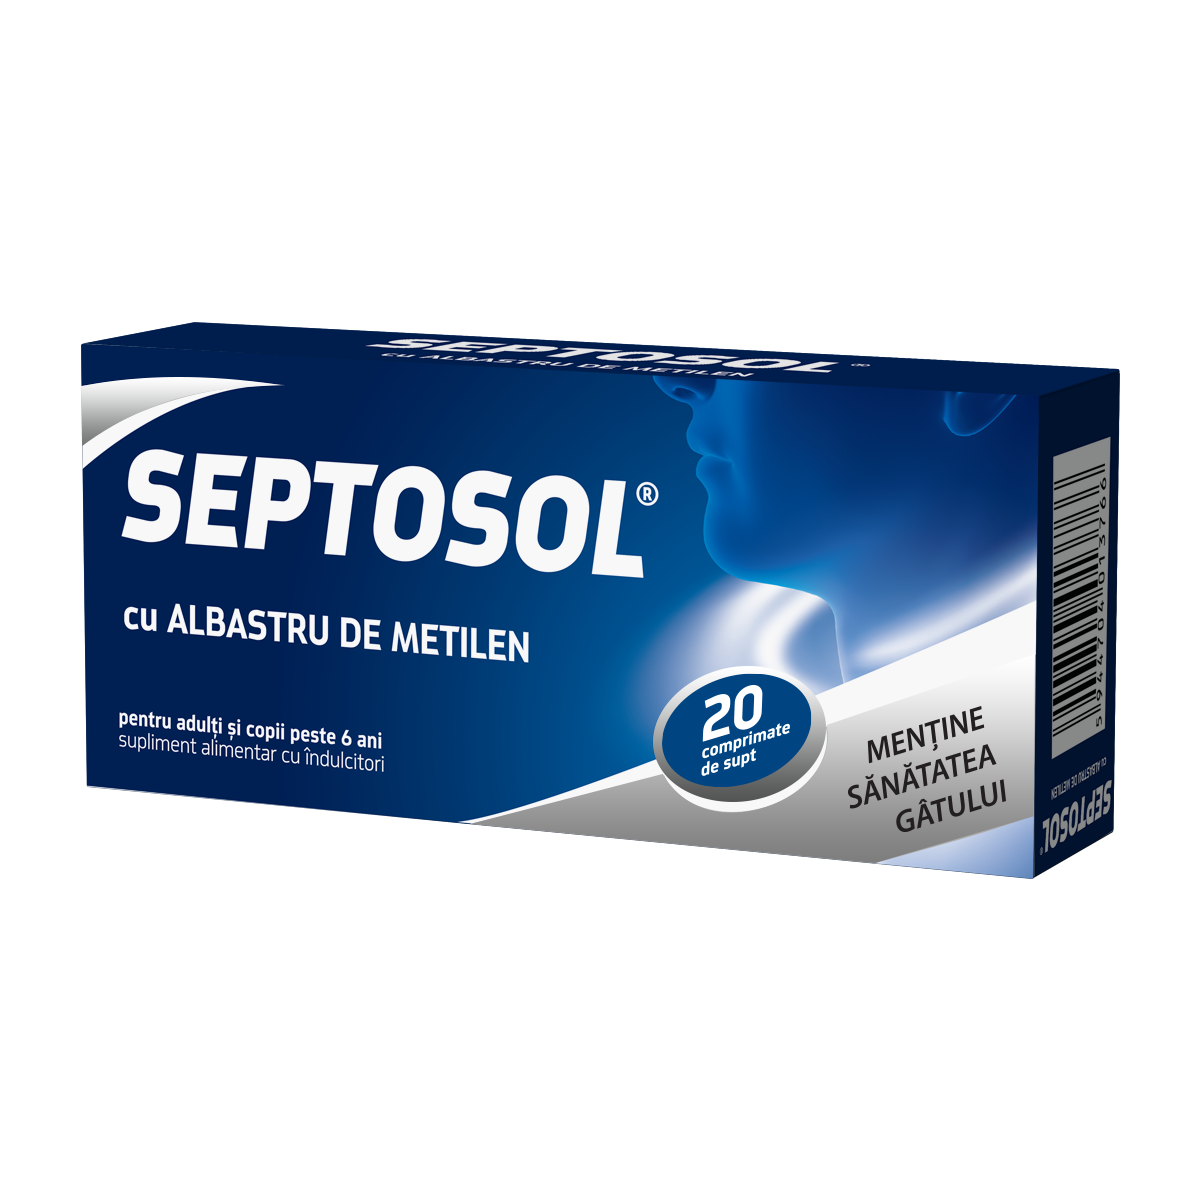 Dureri de gat - Septosol cu albastru de metilen, 20 comprimate, Biofarm, sinapis.ro